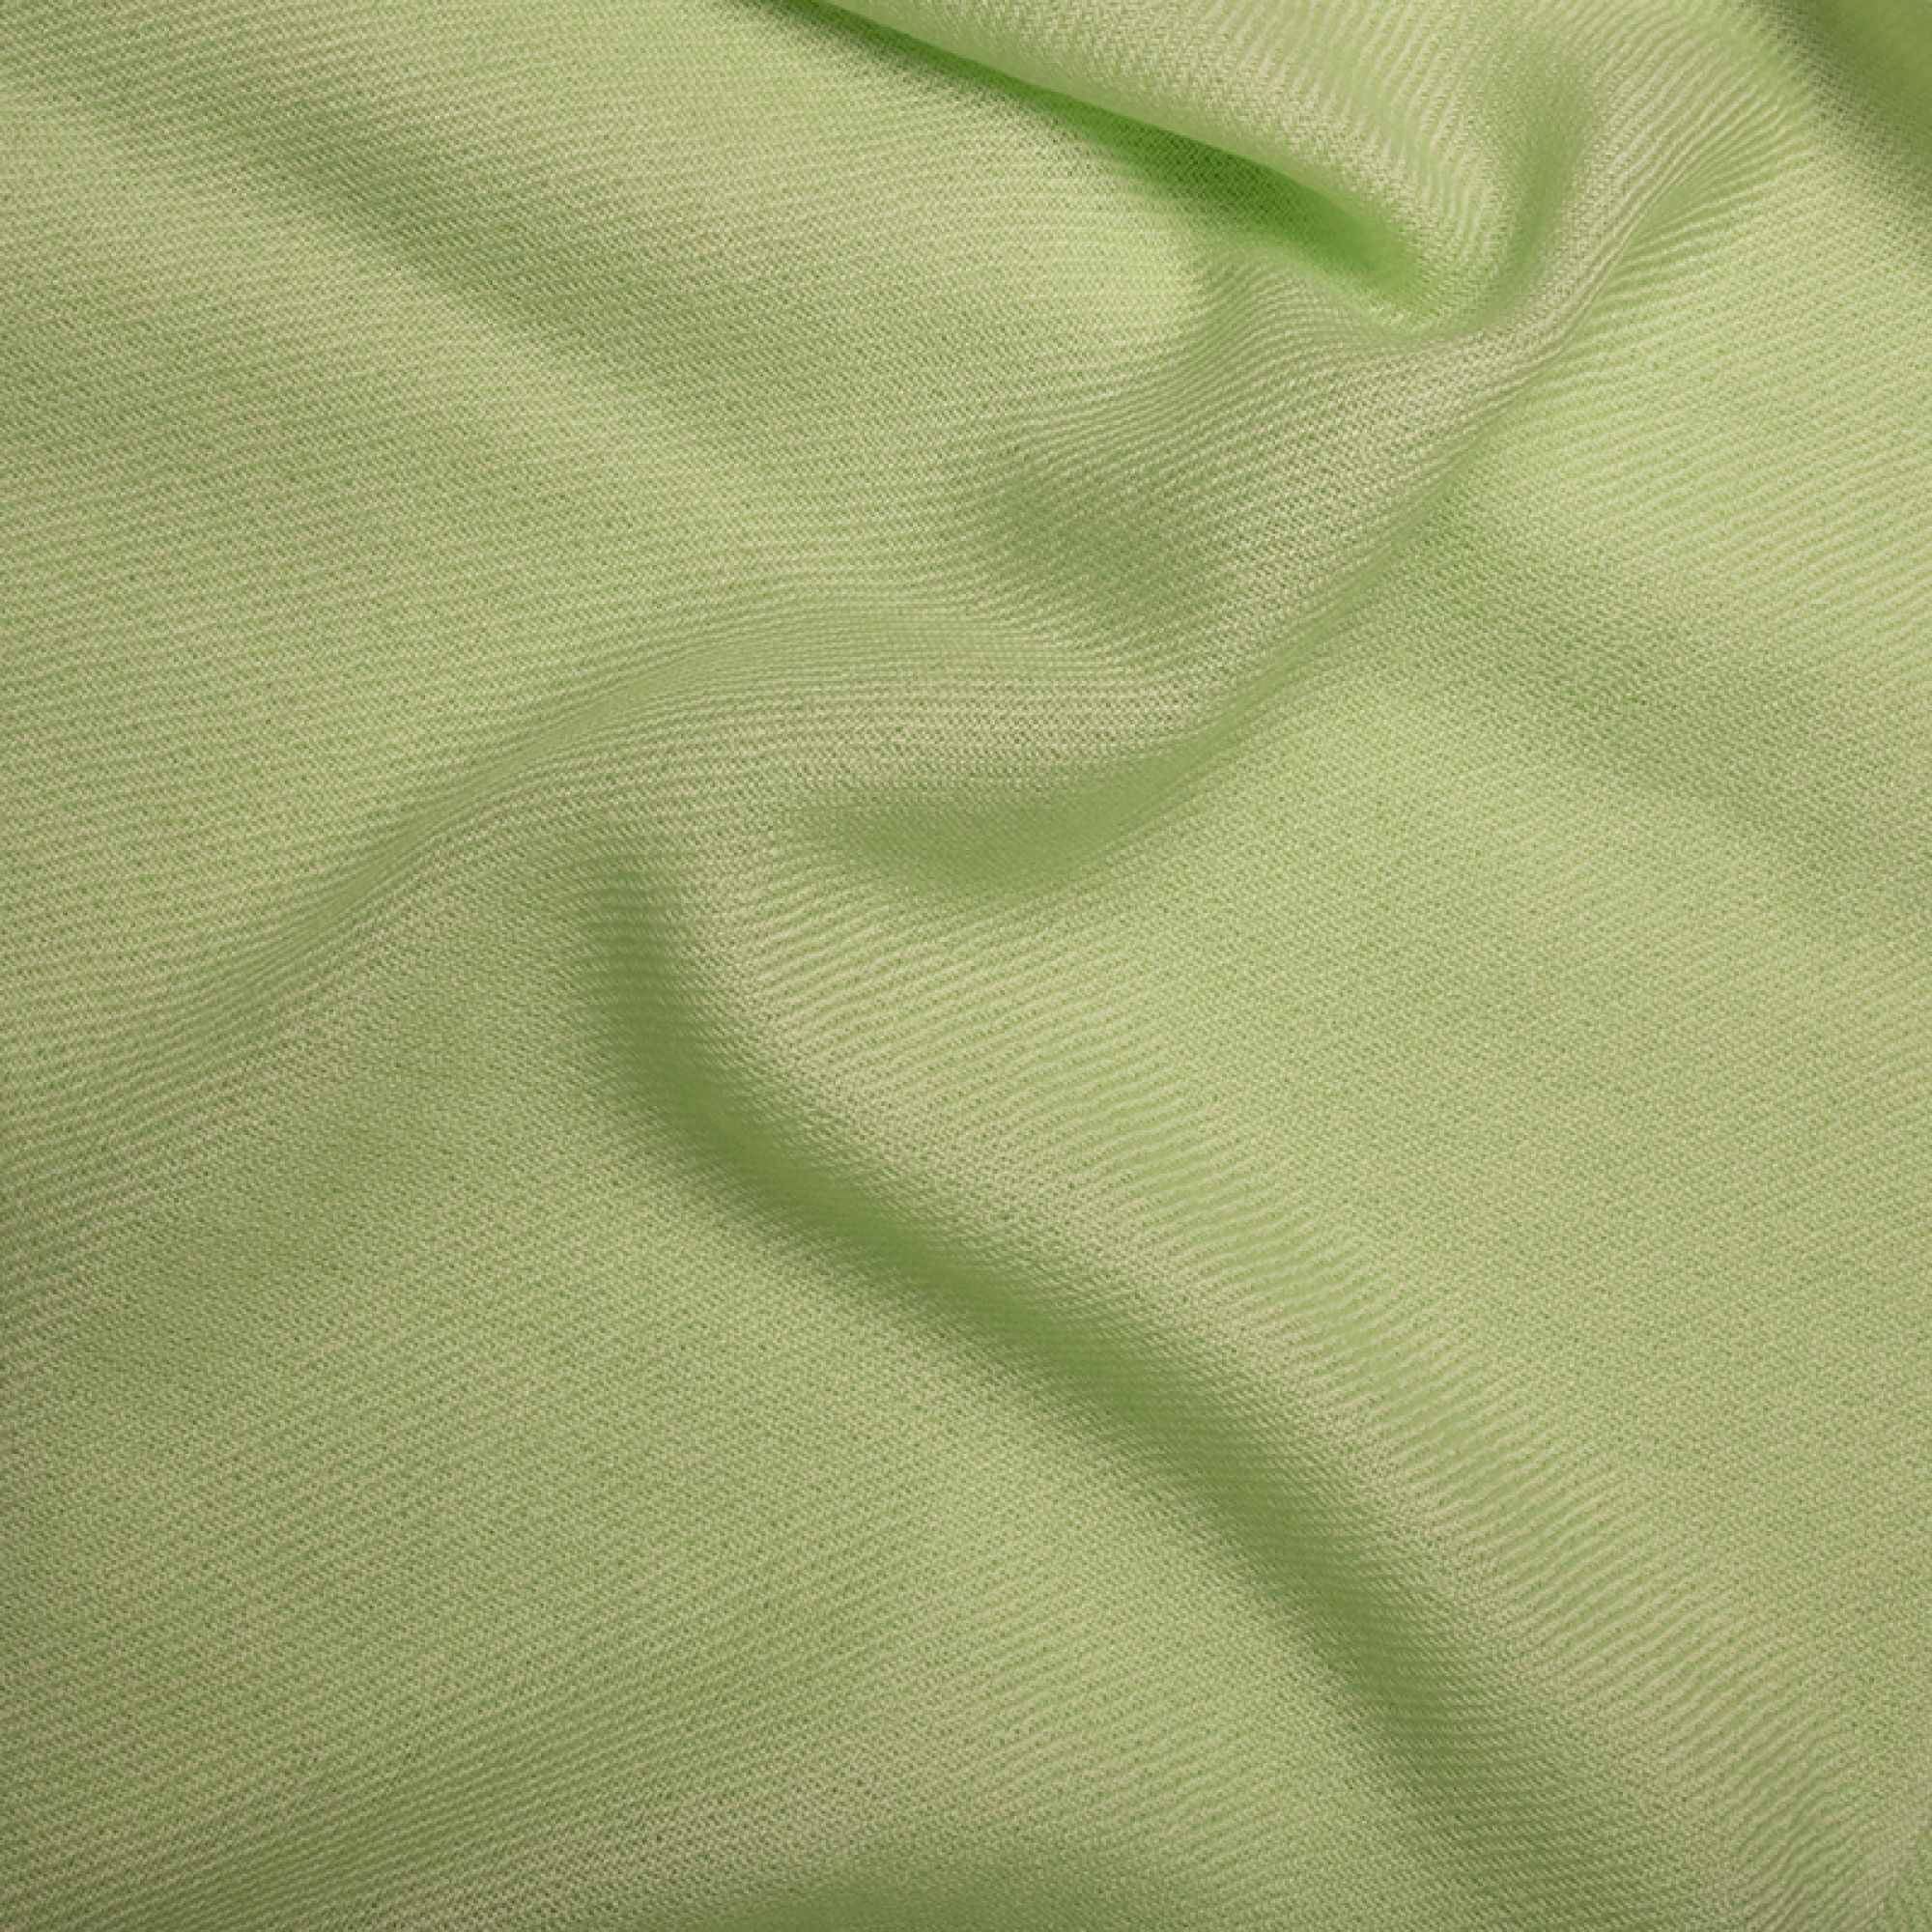 Cachemire pull femme toodoo plain s 140 x 200 vert pale 140 x 200 cm